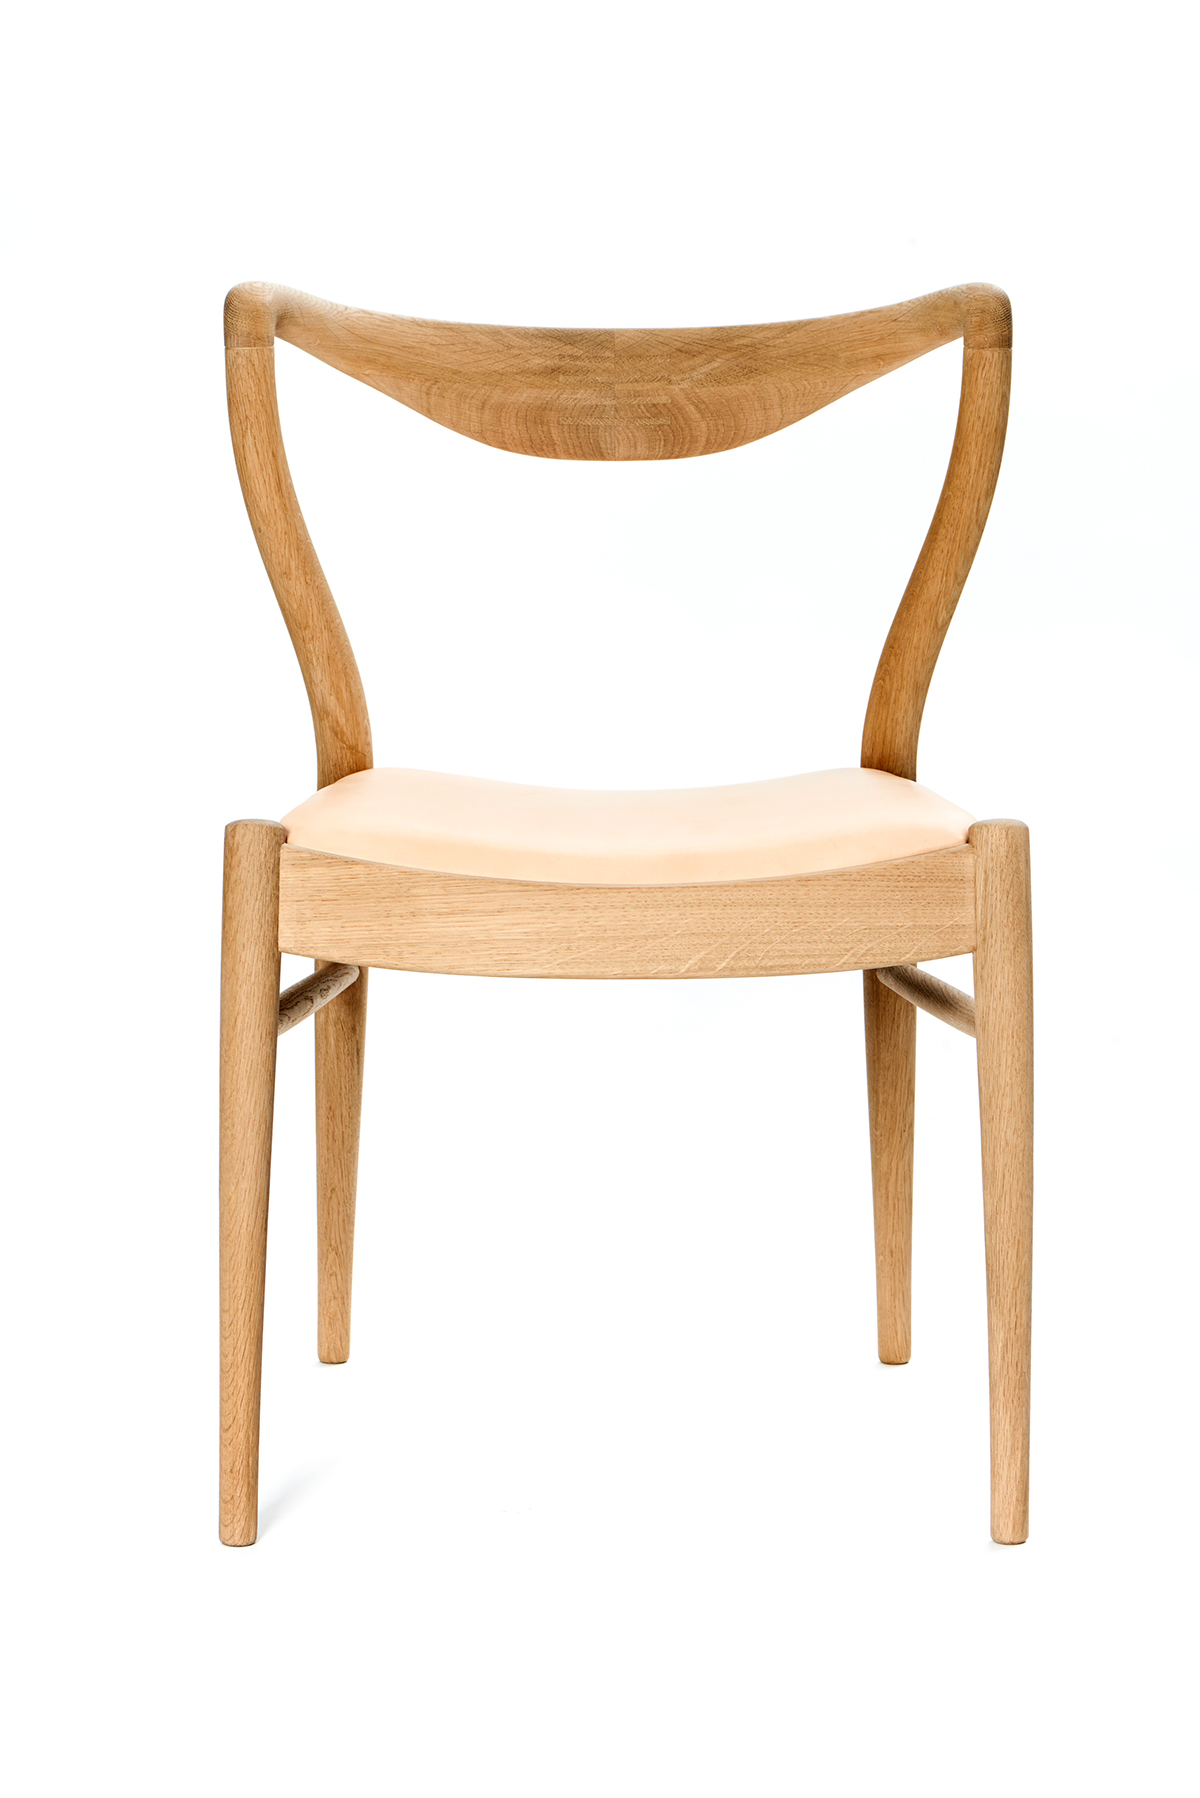 chair wood cnc danish nordic cabinetmaker crafted Scandinavian furniture modern